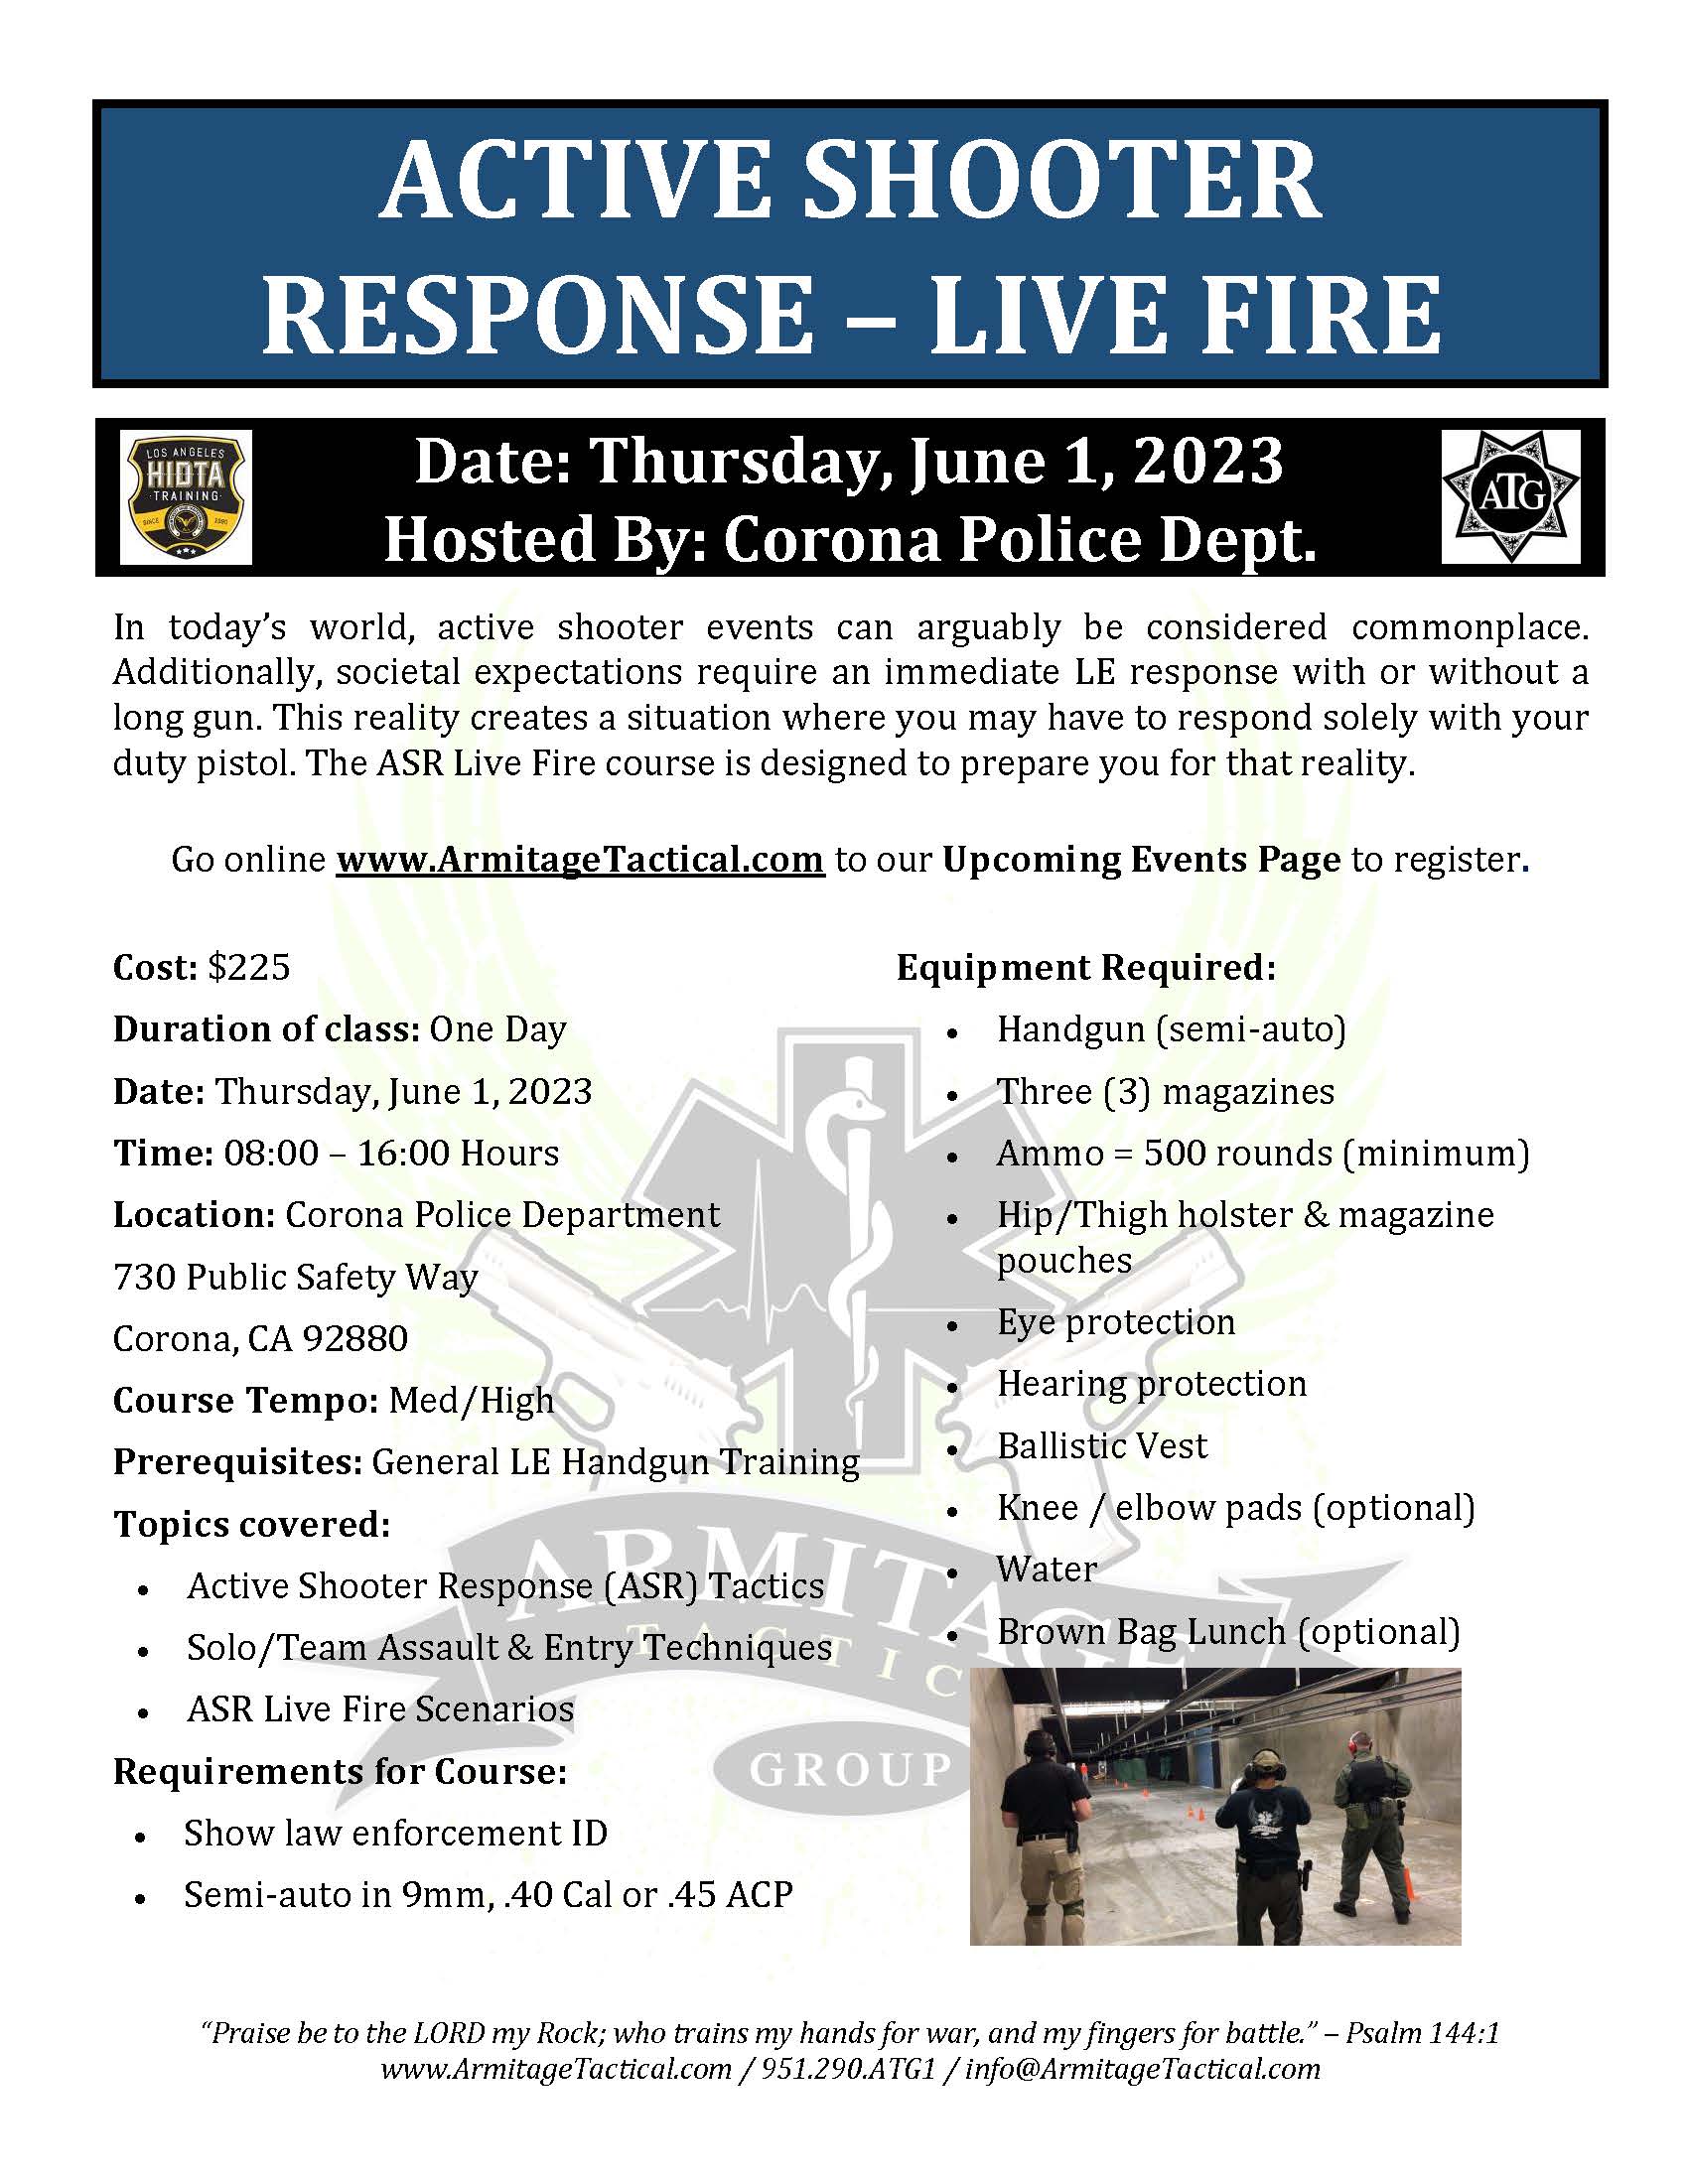 2023/06/01 - Active Shooter Response Live Fire - Corona, CA